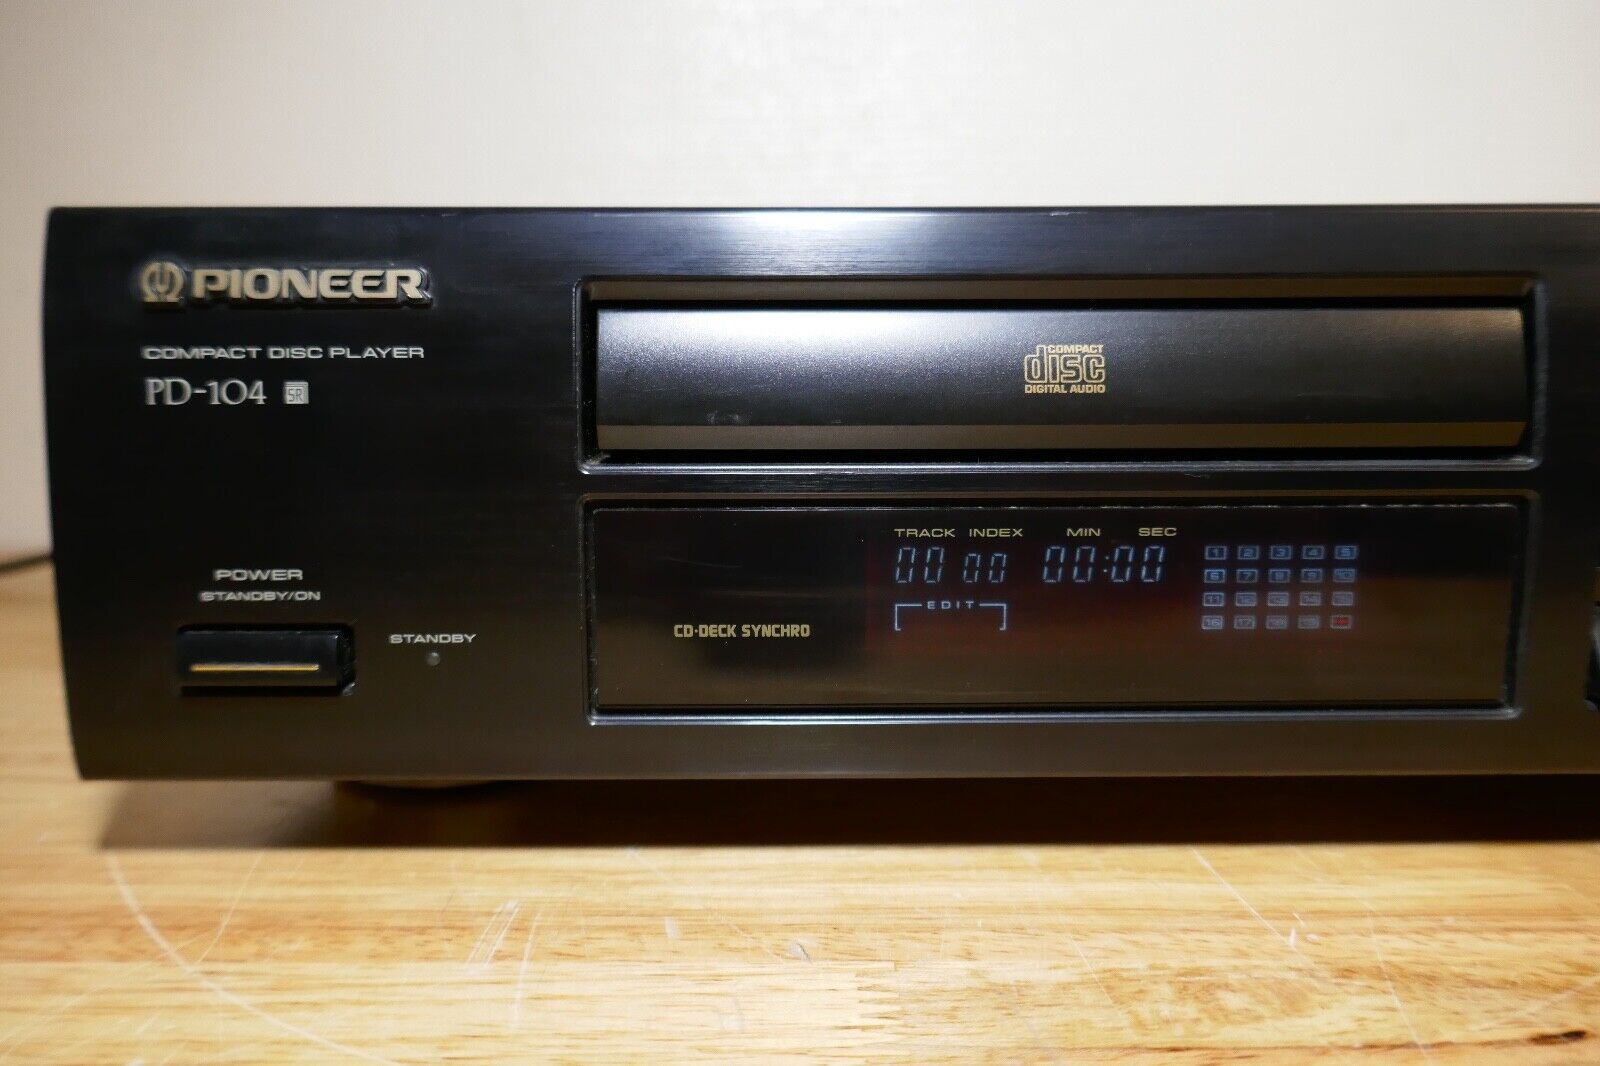 lecteur compact disc player pioneer pd-104 vintage occasion